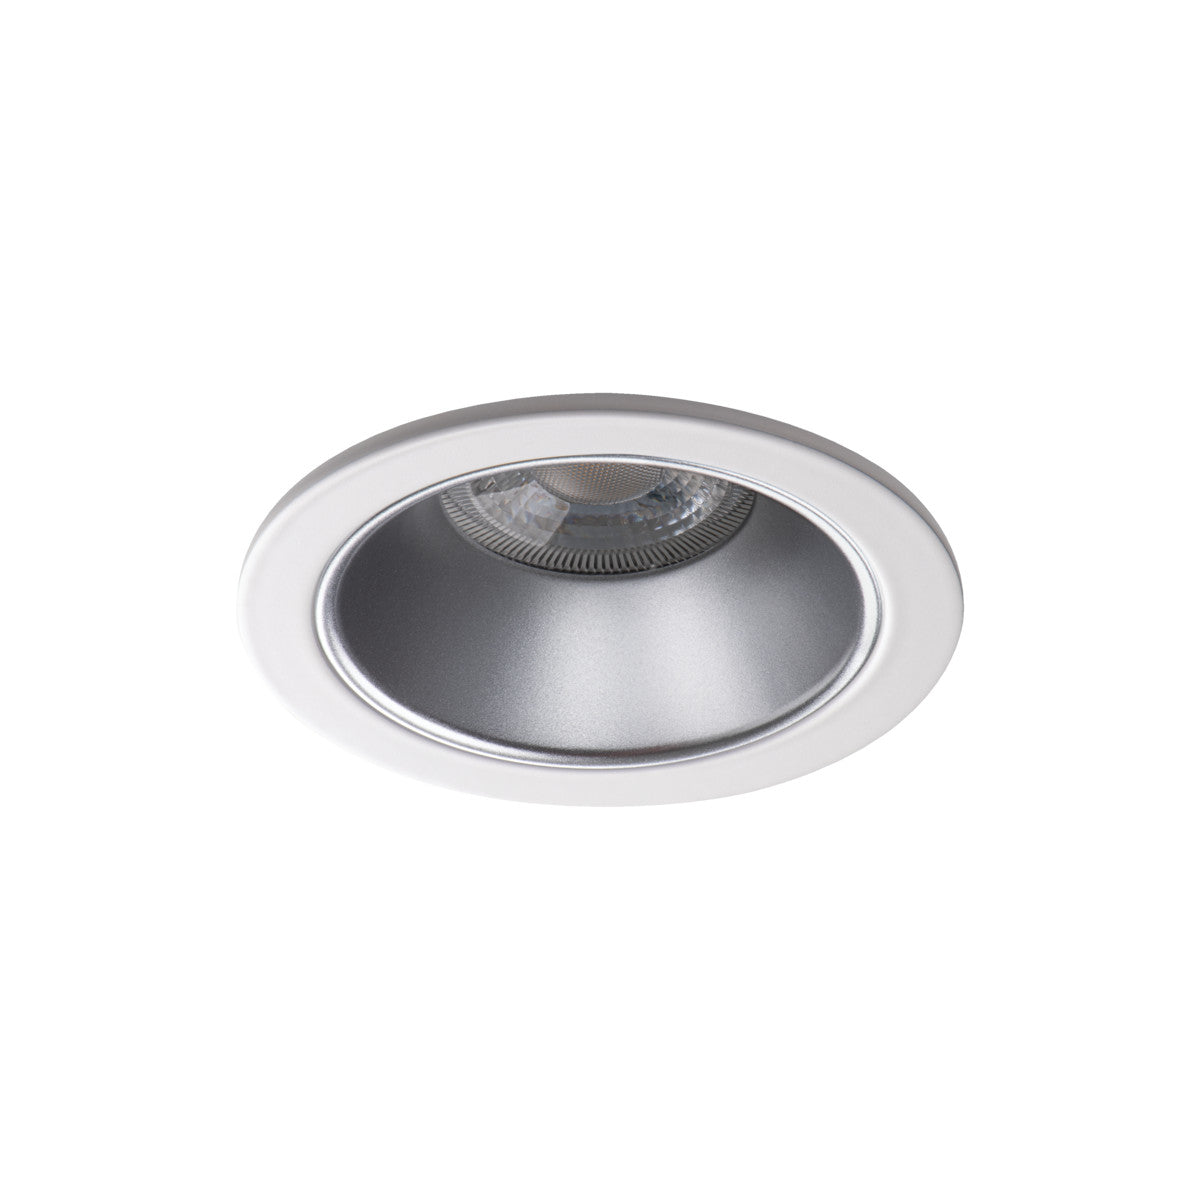 Kanlux GLOZO GU10 240V Spot Light Ceiling Round Recessed Spotlight Downlight Fitting